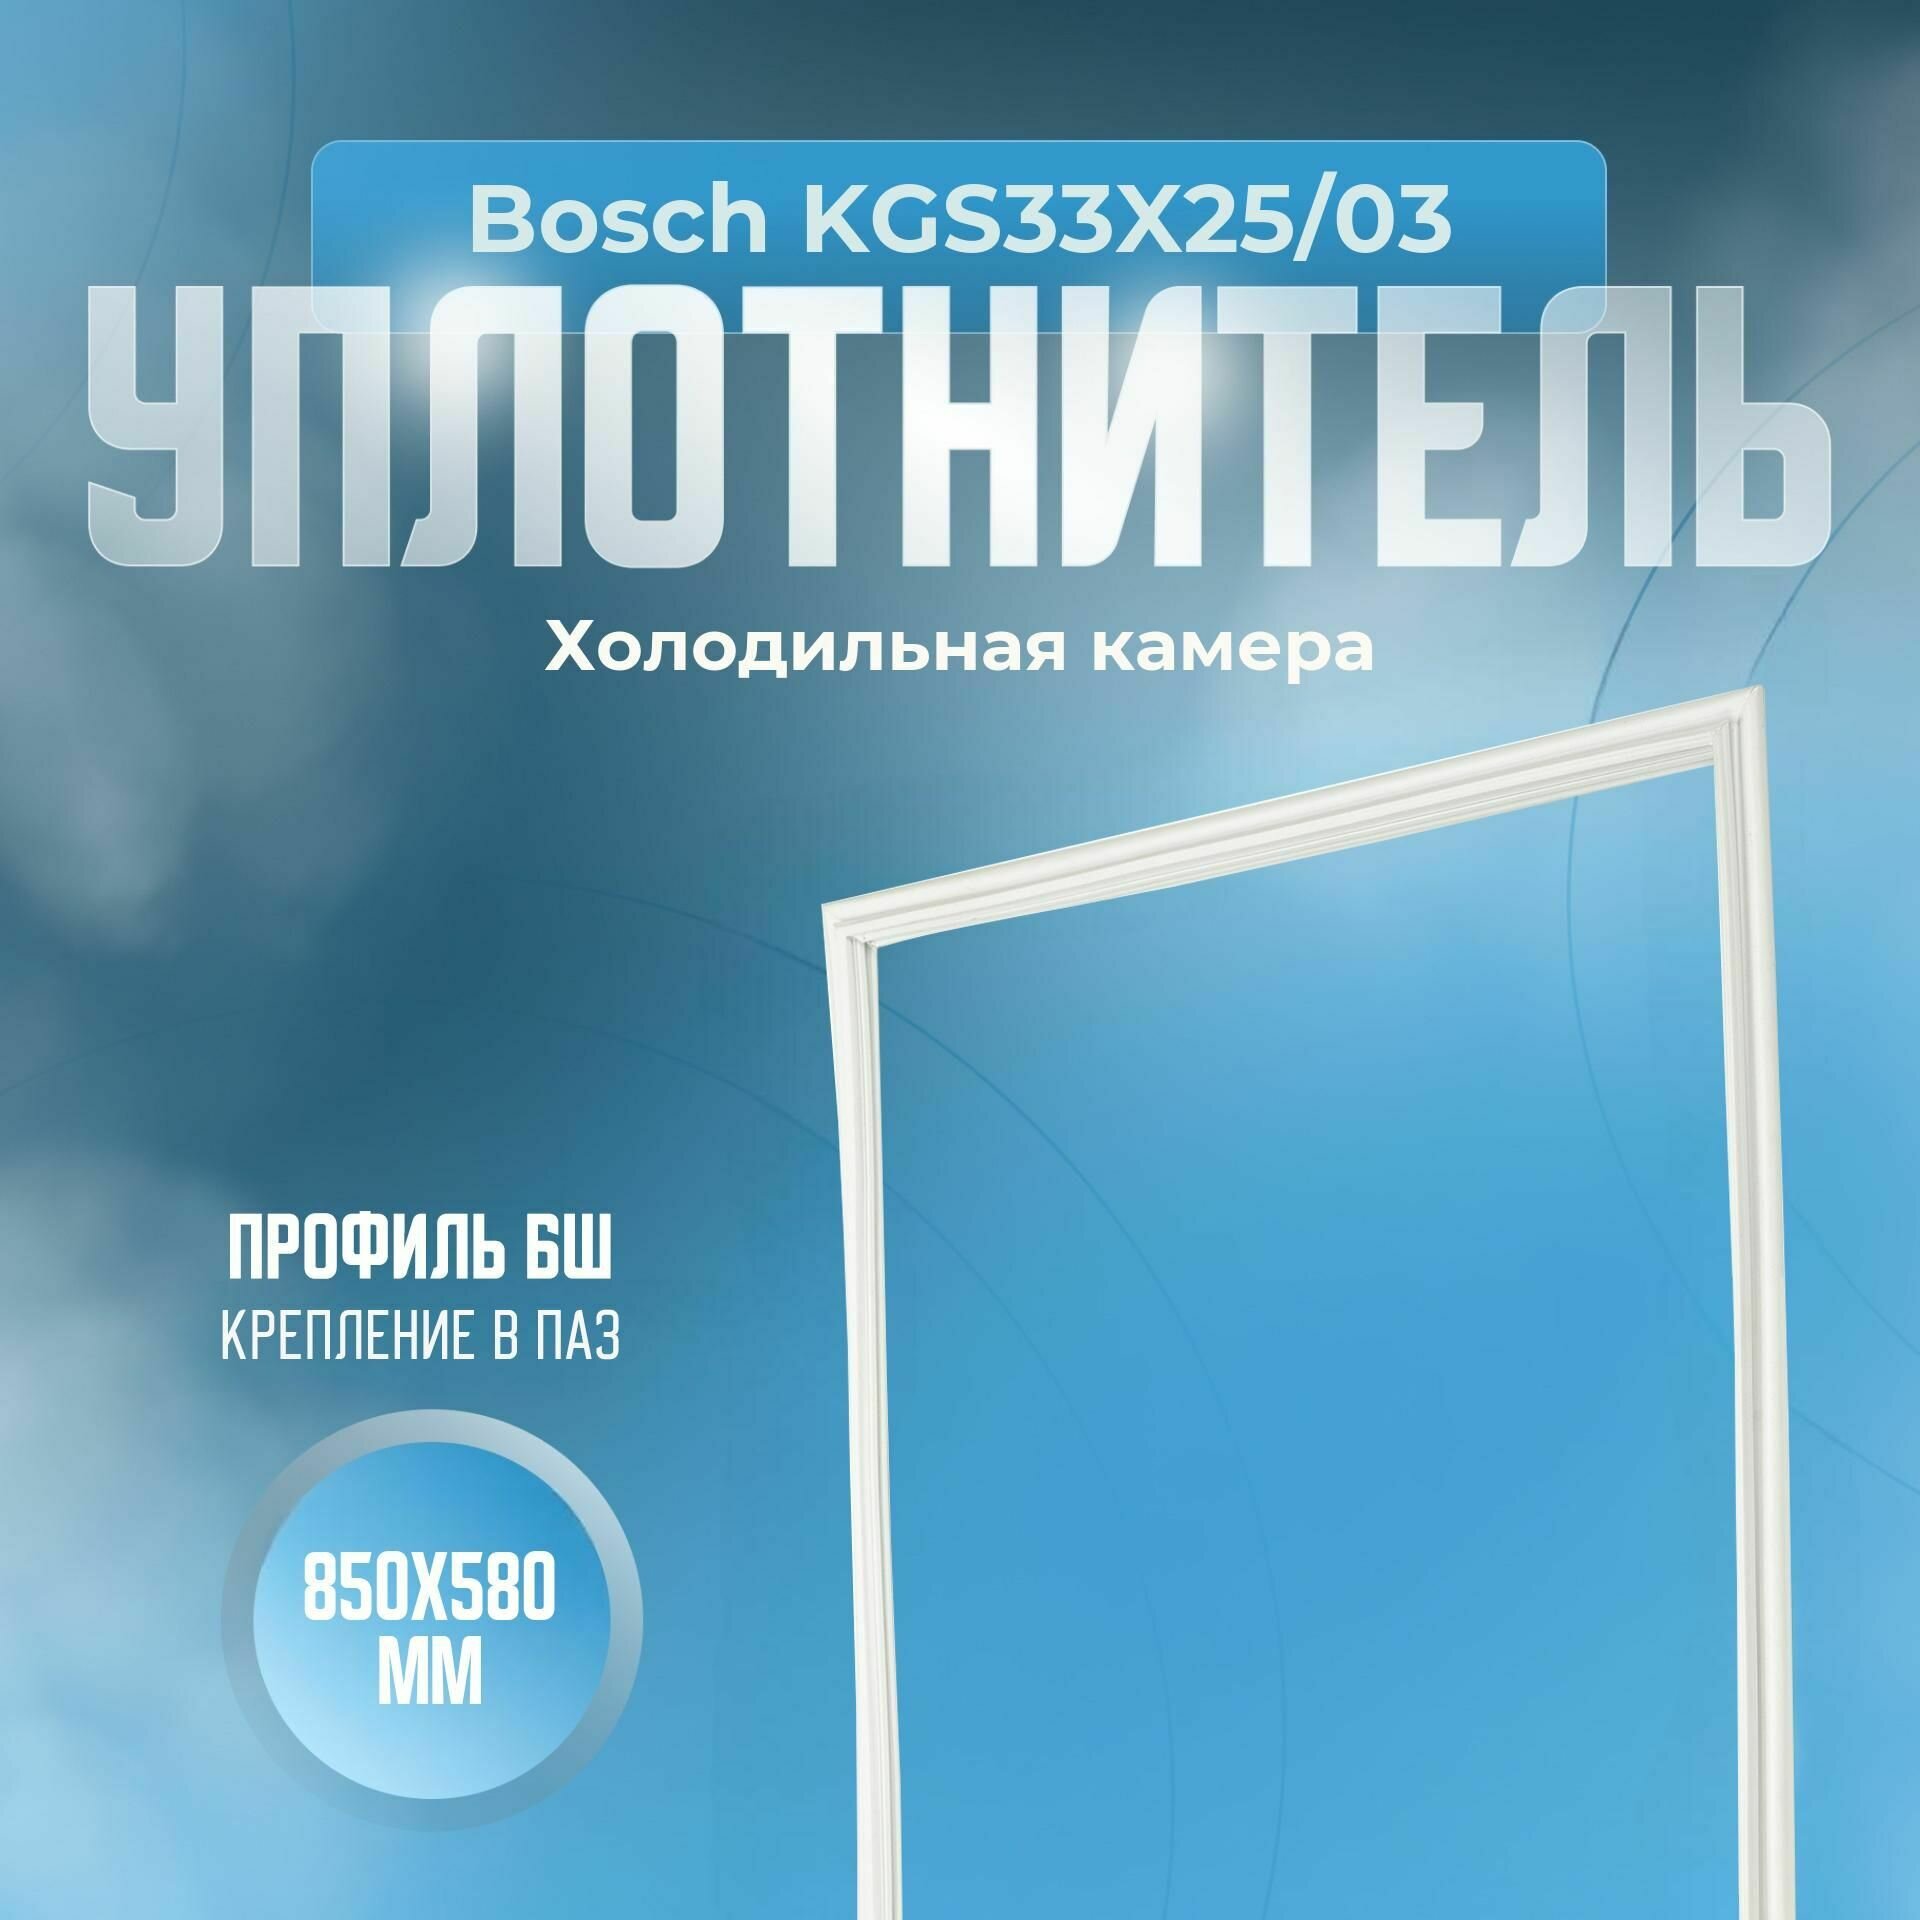 Уплотнитель Bosch KGS33X25/03. х. к, Размер - 850x580 мм. БШ